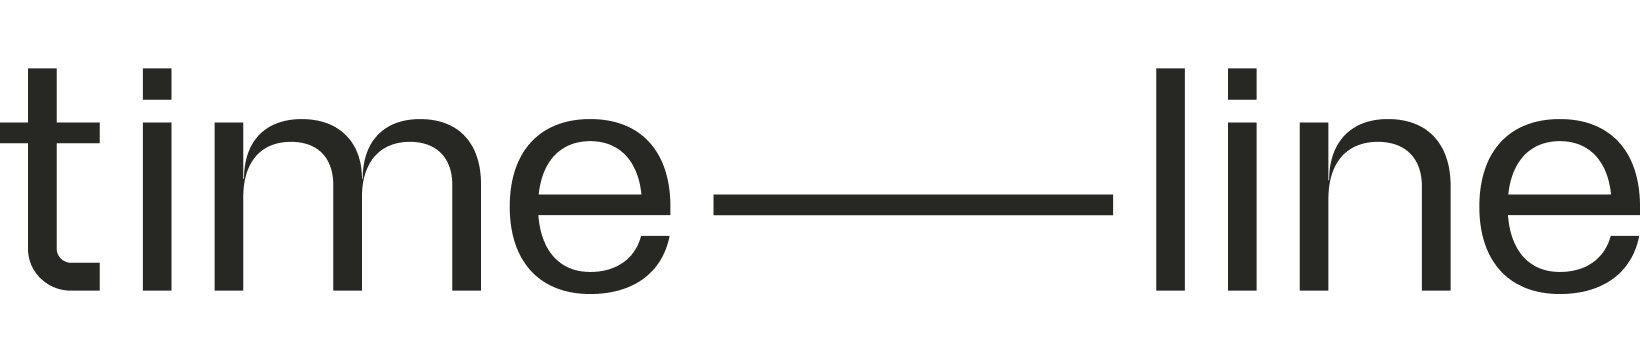 Timeline Longevity logo